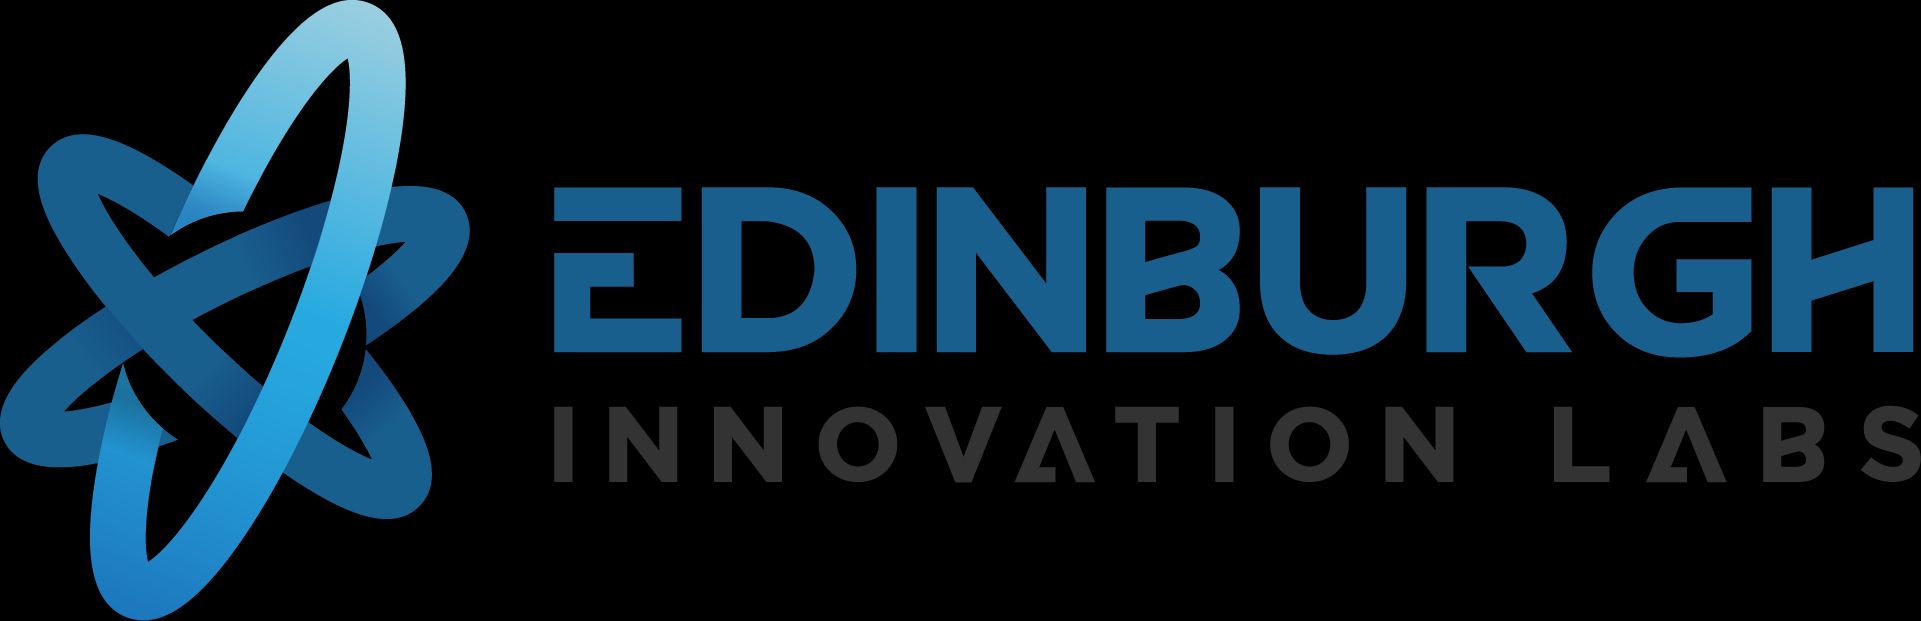 Edinburgh Innovation Labs